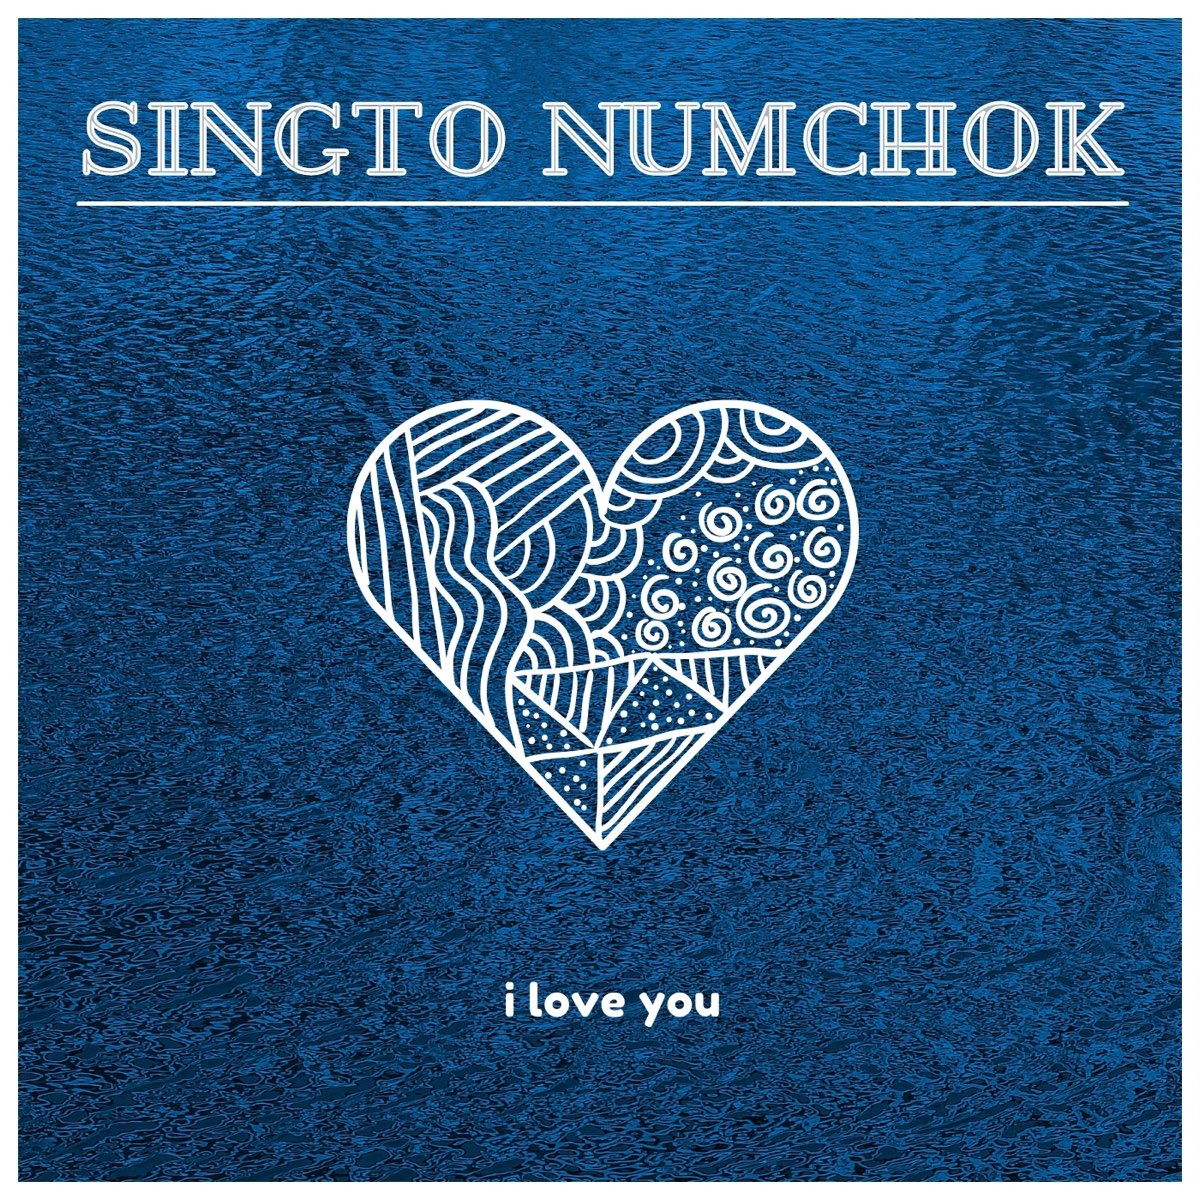 I LOVE YOU - Single - Album by Singto Numchok - Apple Music